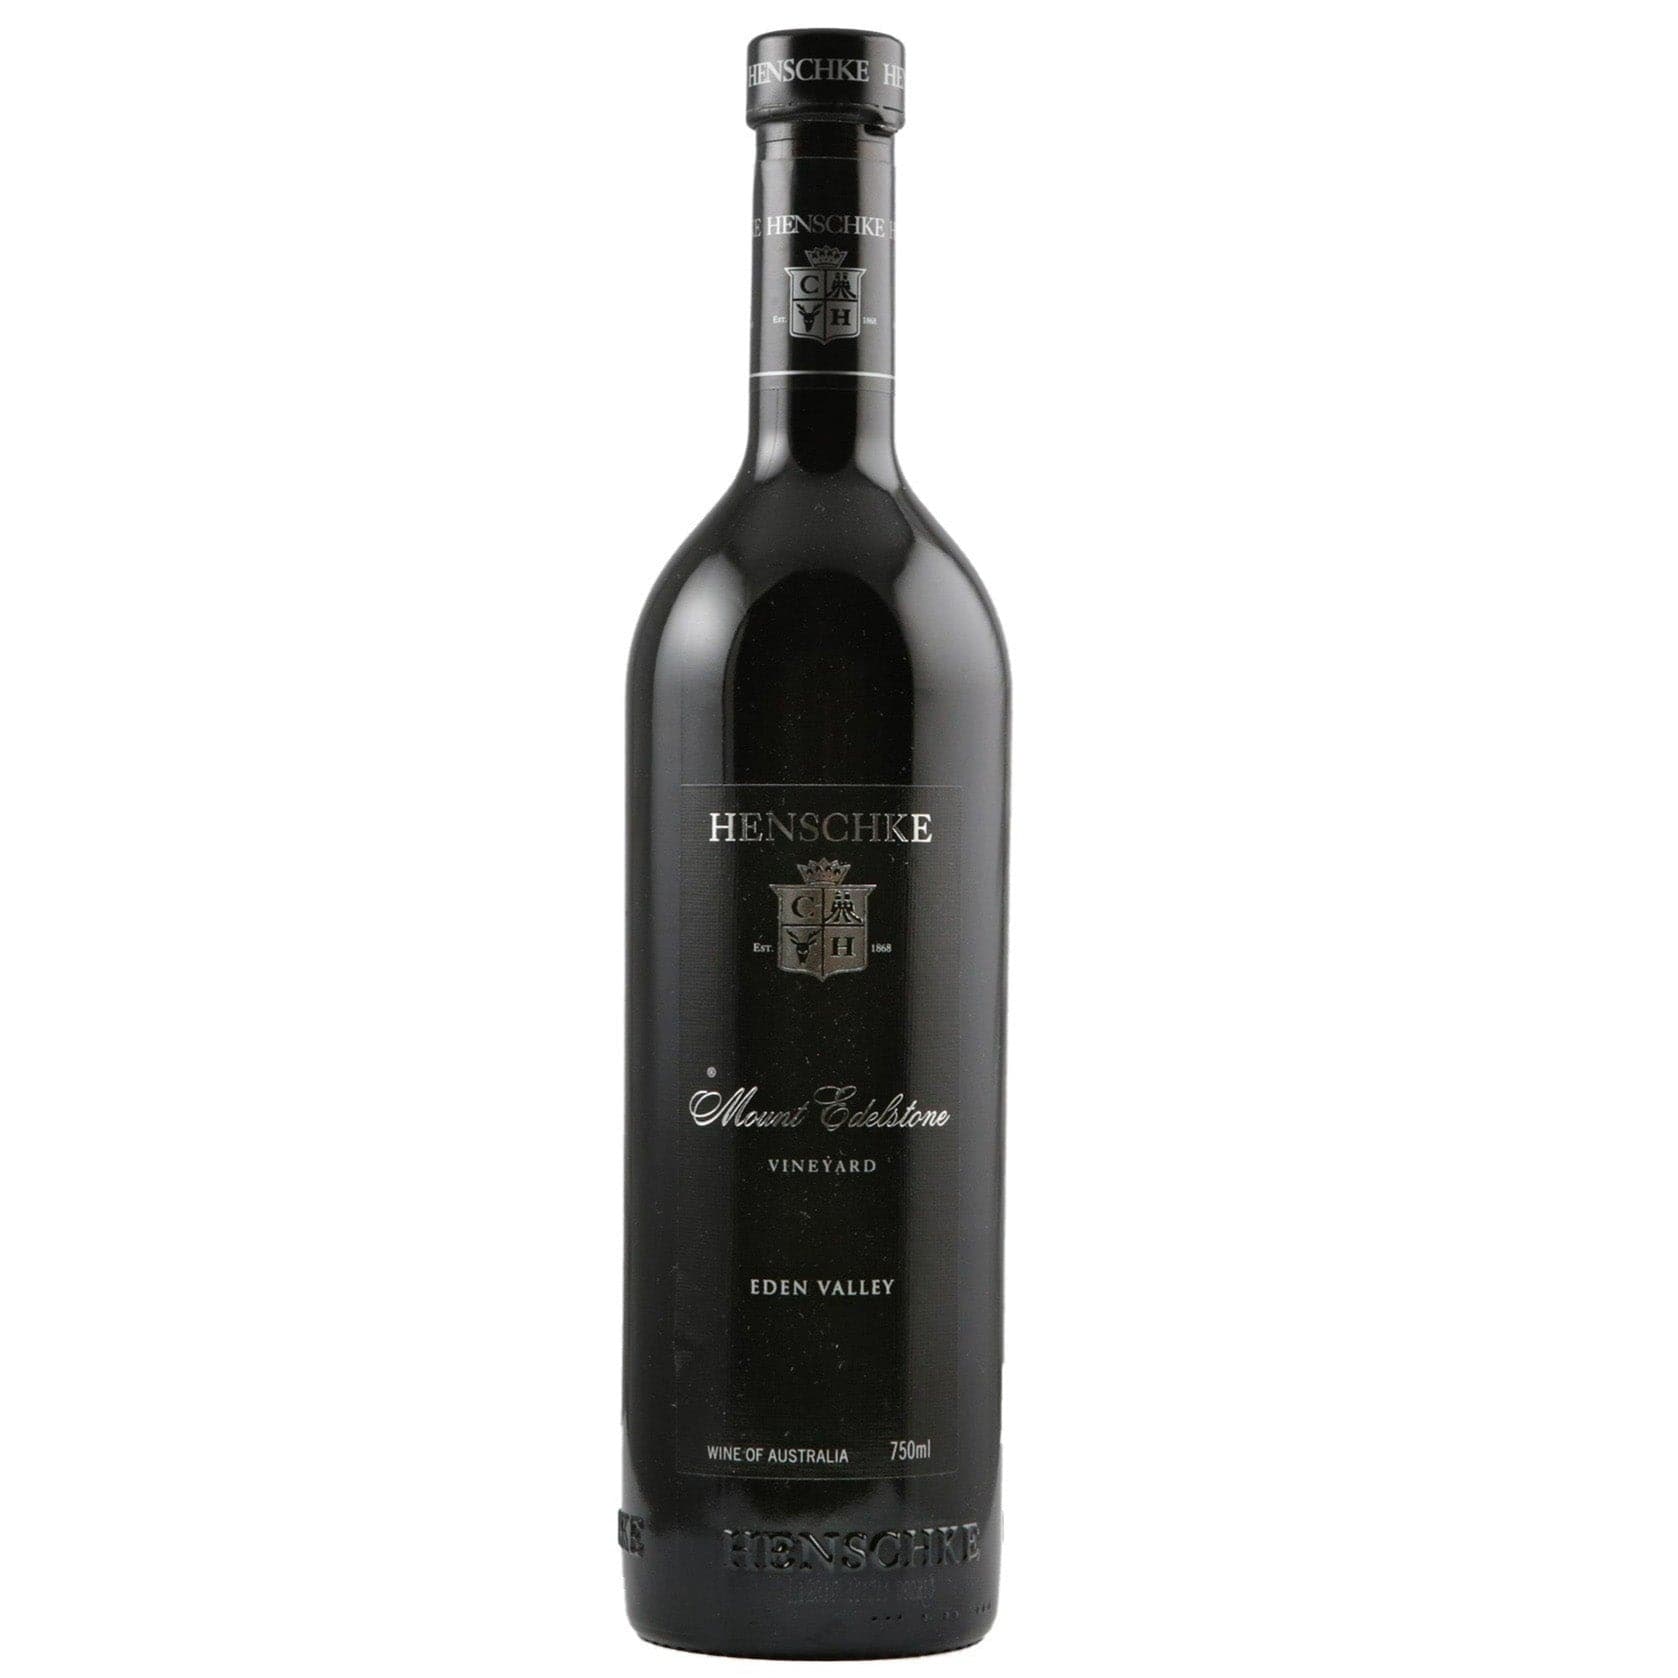 Single bottle of Red wine Henschke, Mount Edelstone Shiraz, Eden Valley, 2016 100% Shiraz